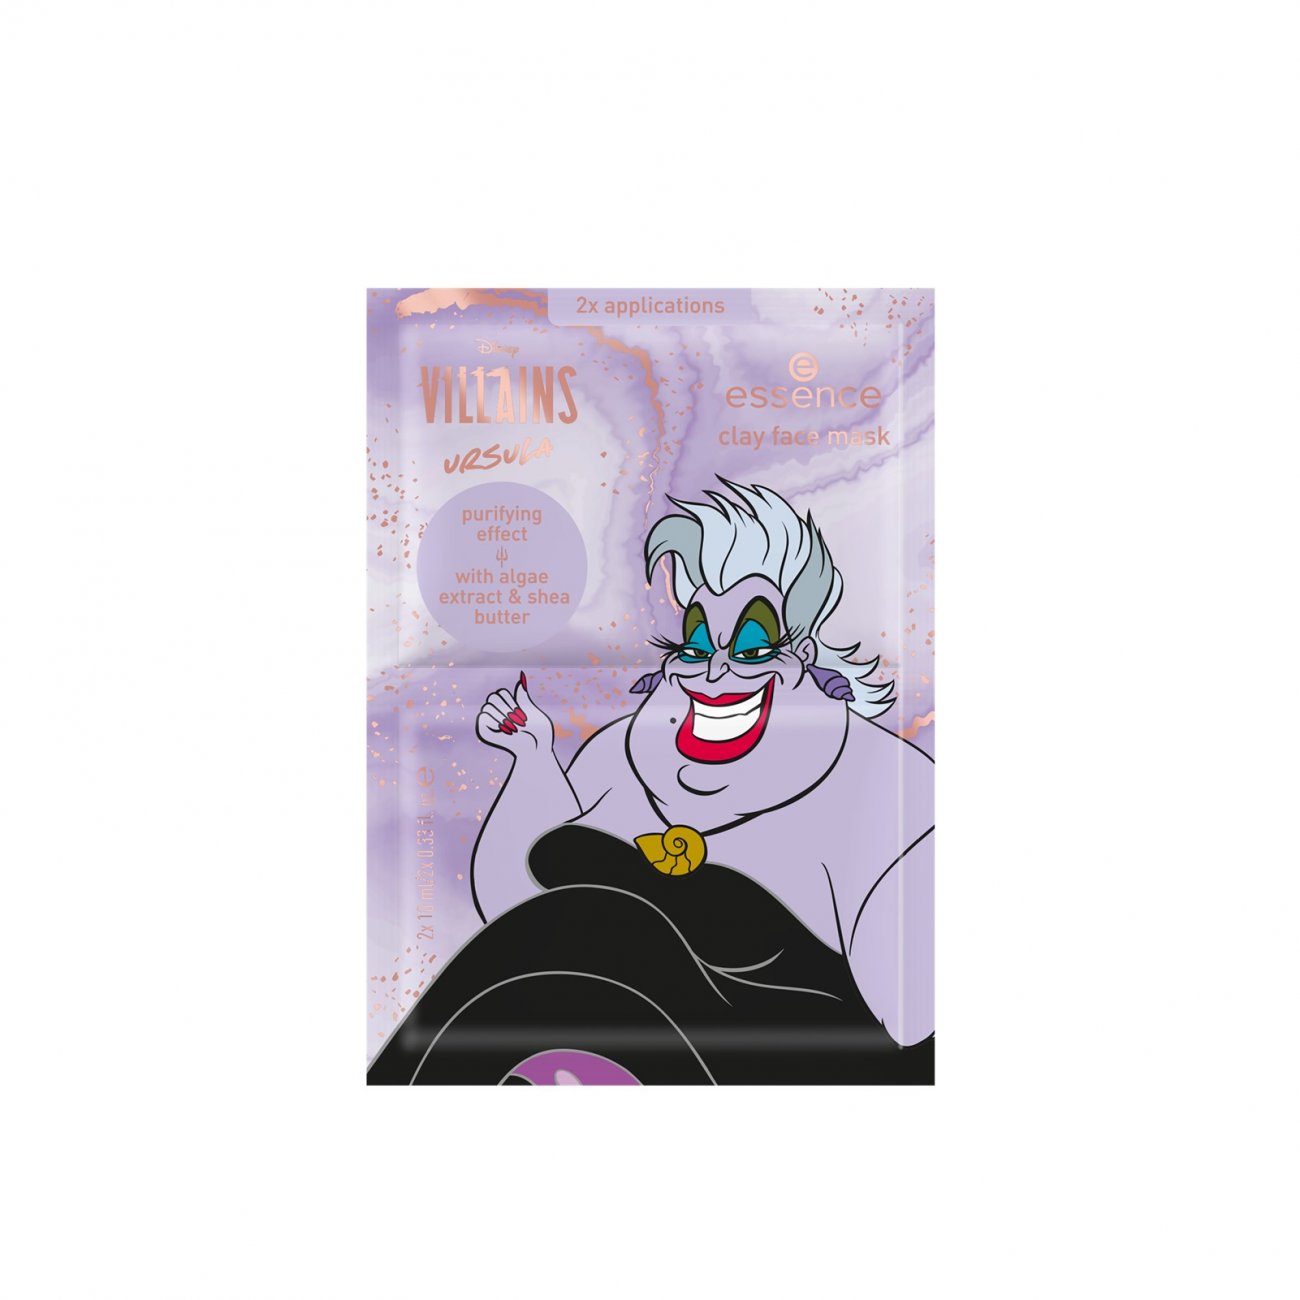 Essence Disney Villains Ursula Clay Face Mask 02 Misery 2x10ml